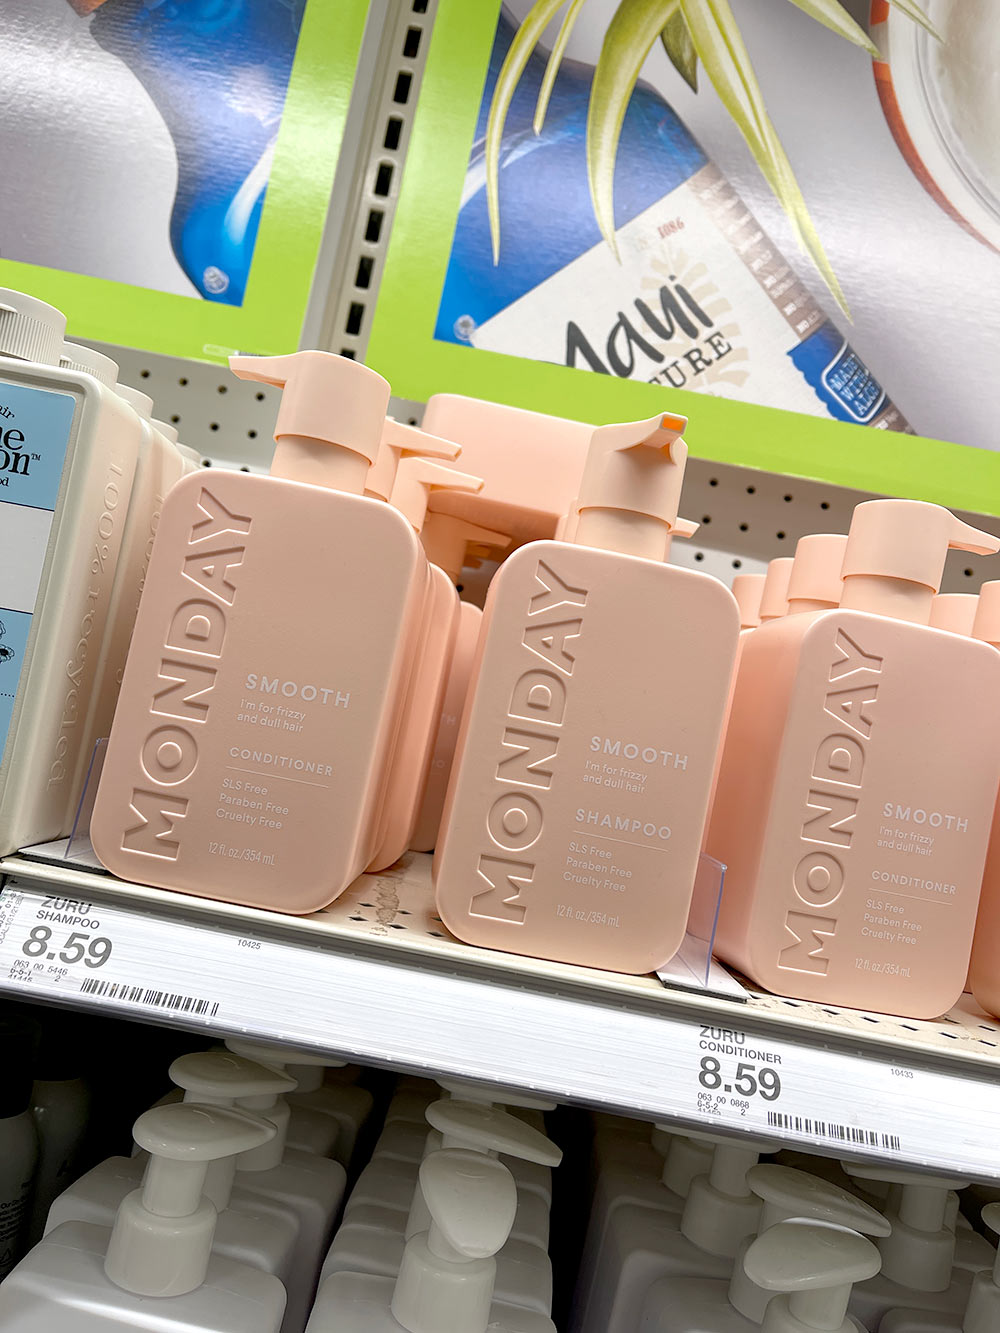 monday shampoo conditioner target